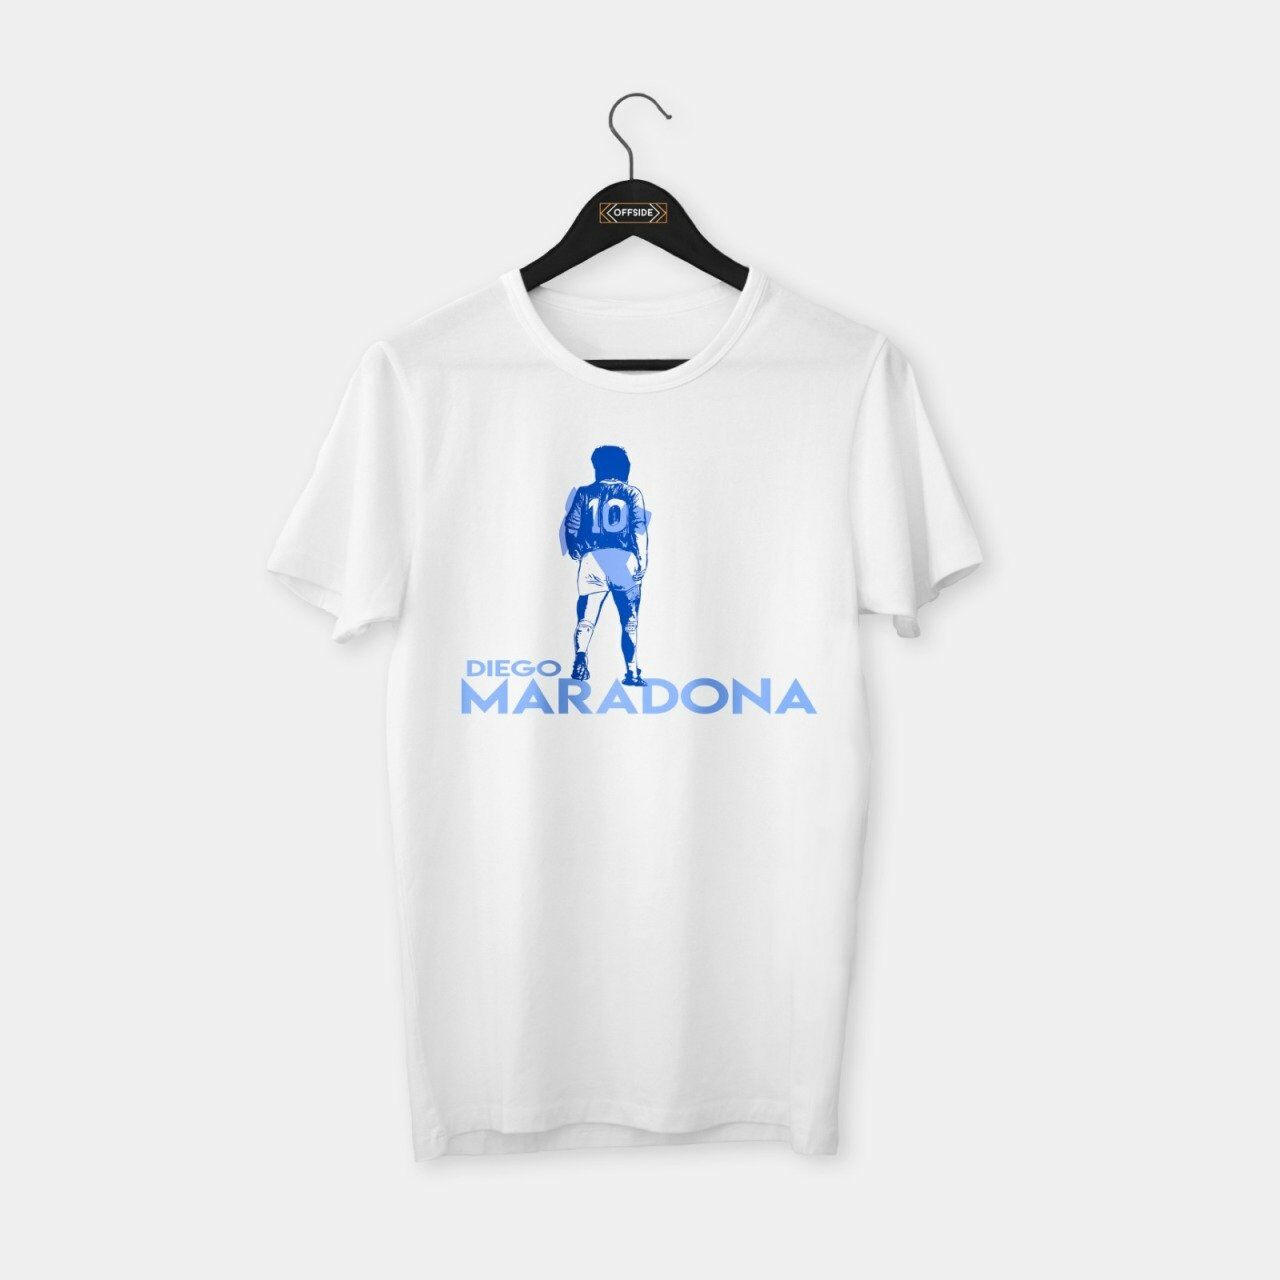 Maradona (Napoli) II T-shirt